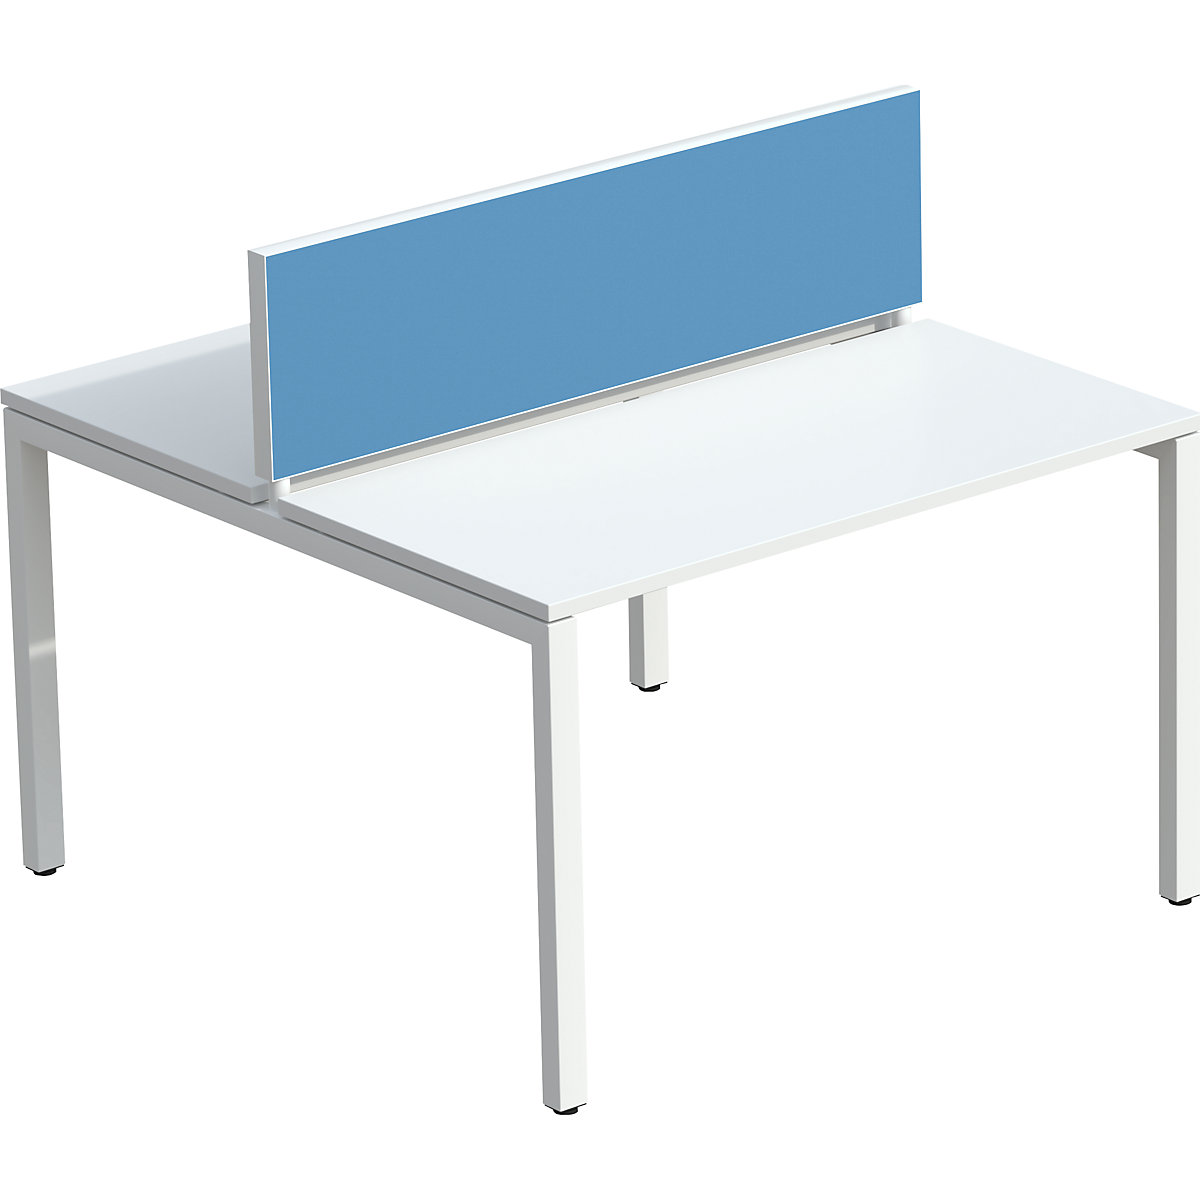 Table partition for team desks (Product illustration 16)-15